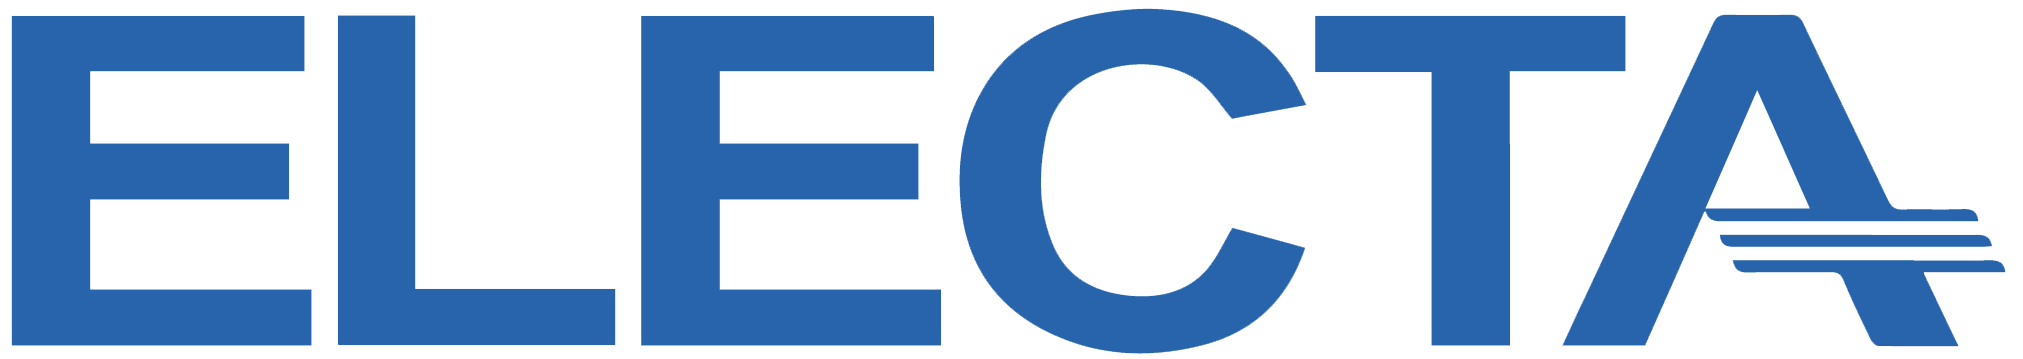 electa-logo-alpha